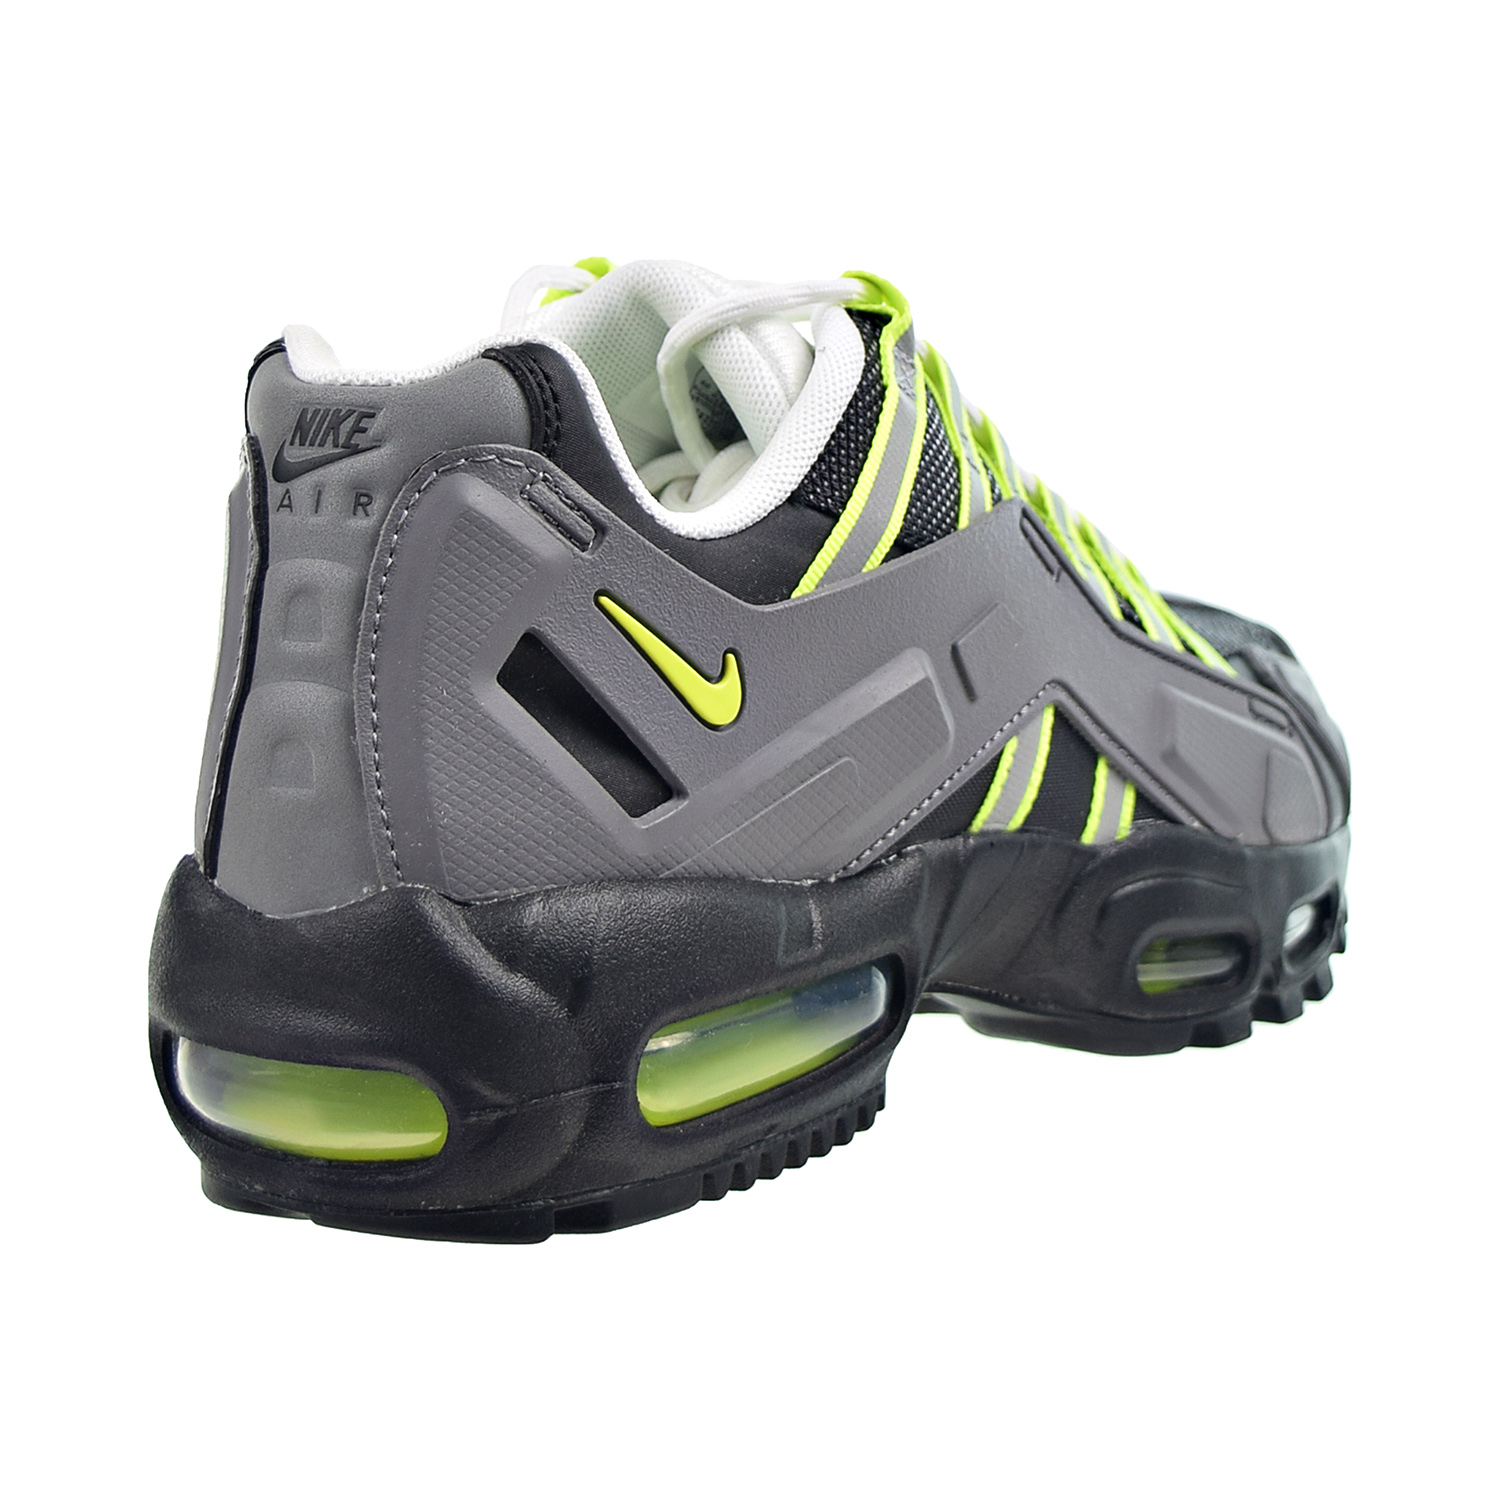 Nike Air Max 95 NDSTRKT AM 95 Men's Shoes Black-Neon Yellow-Medium Grey cz3591-002 - image 3 of 6